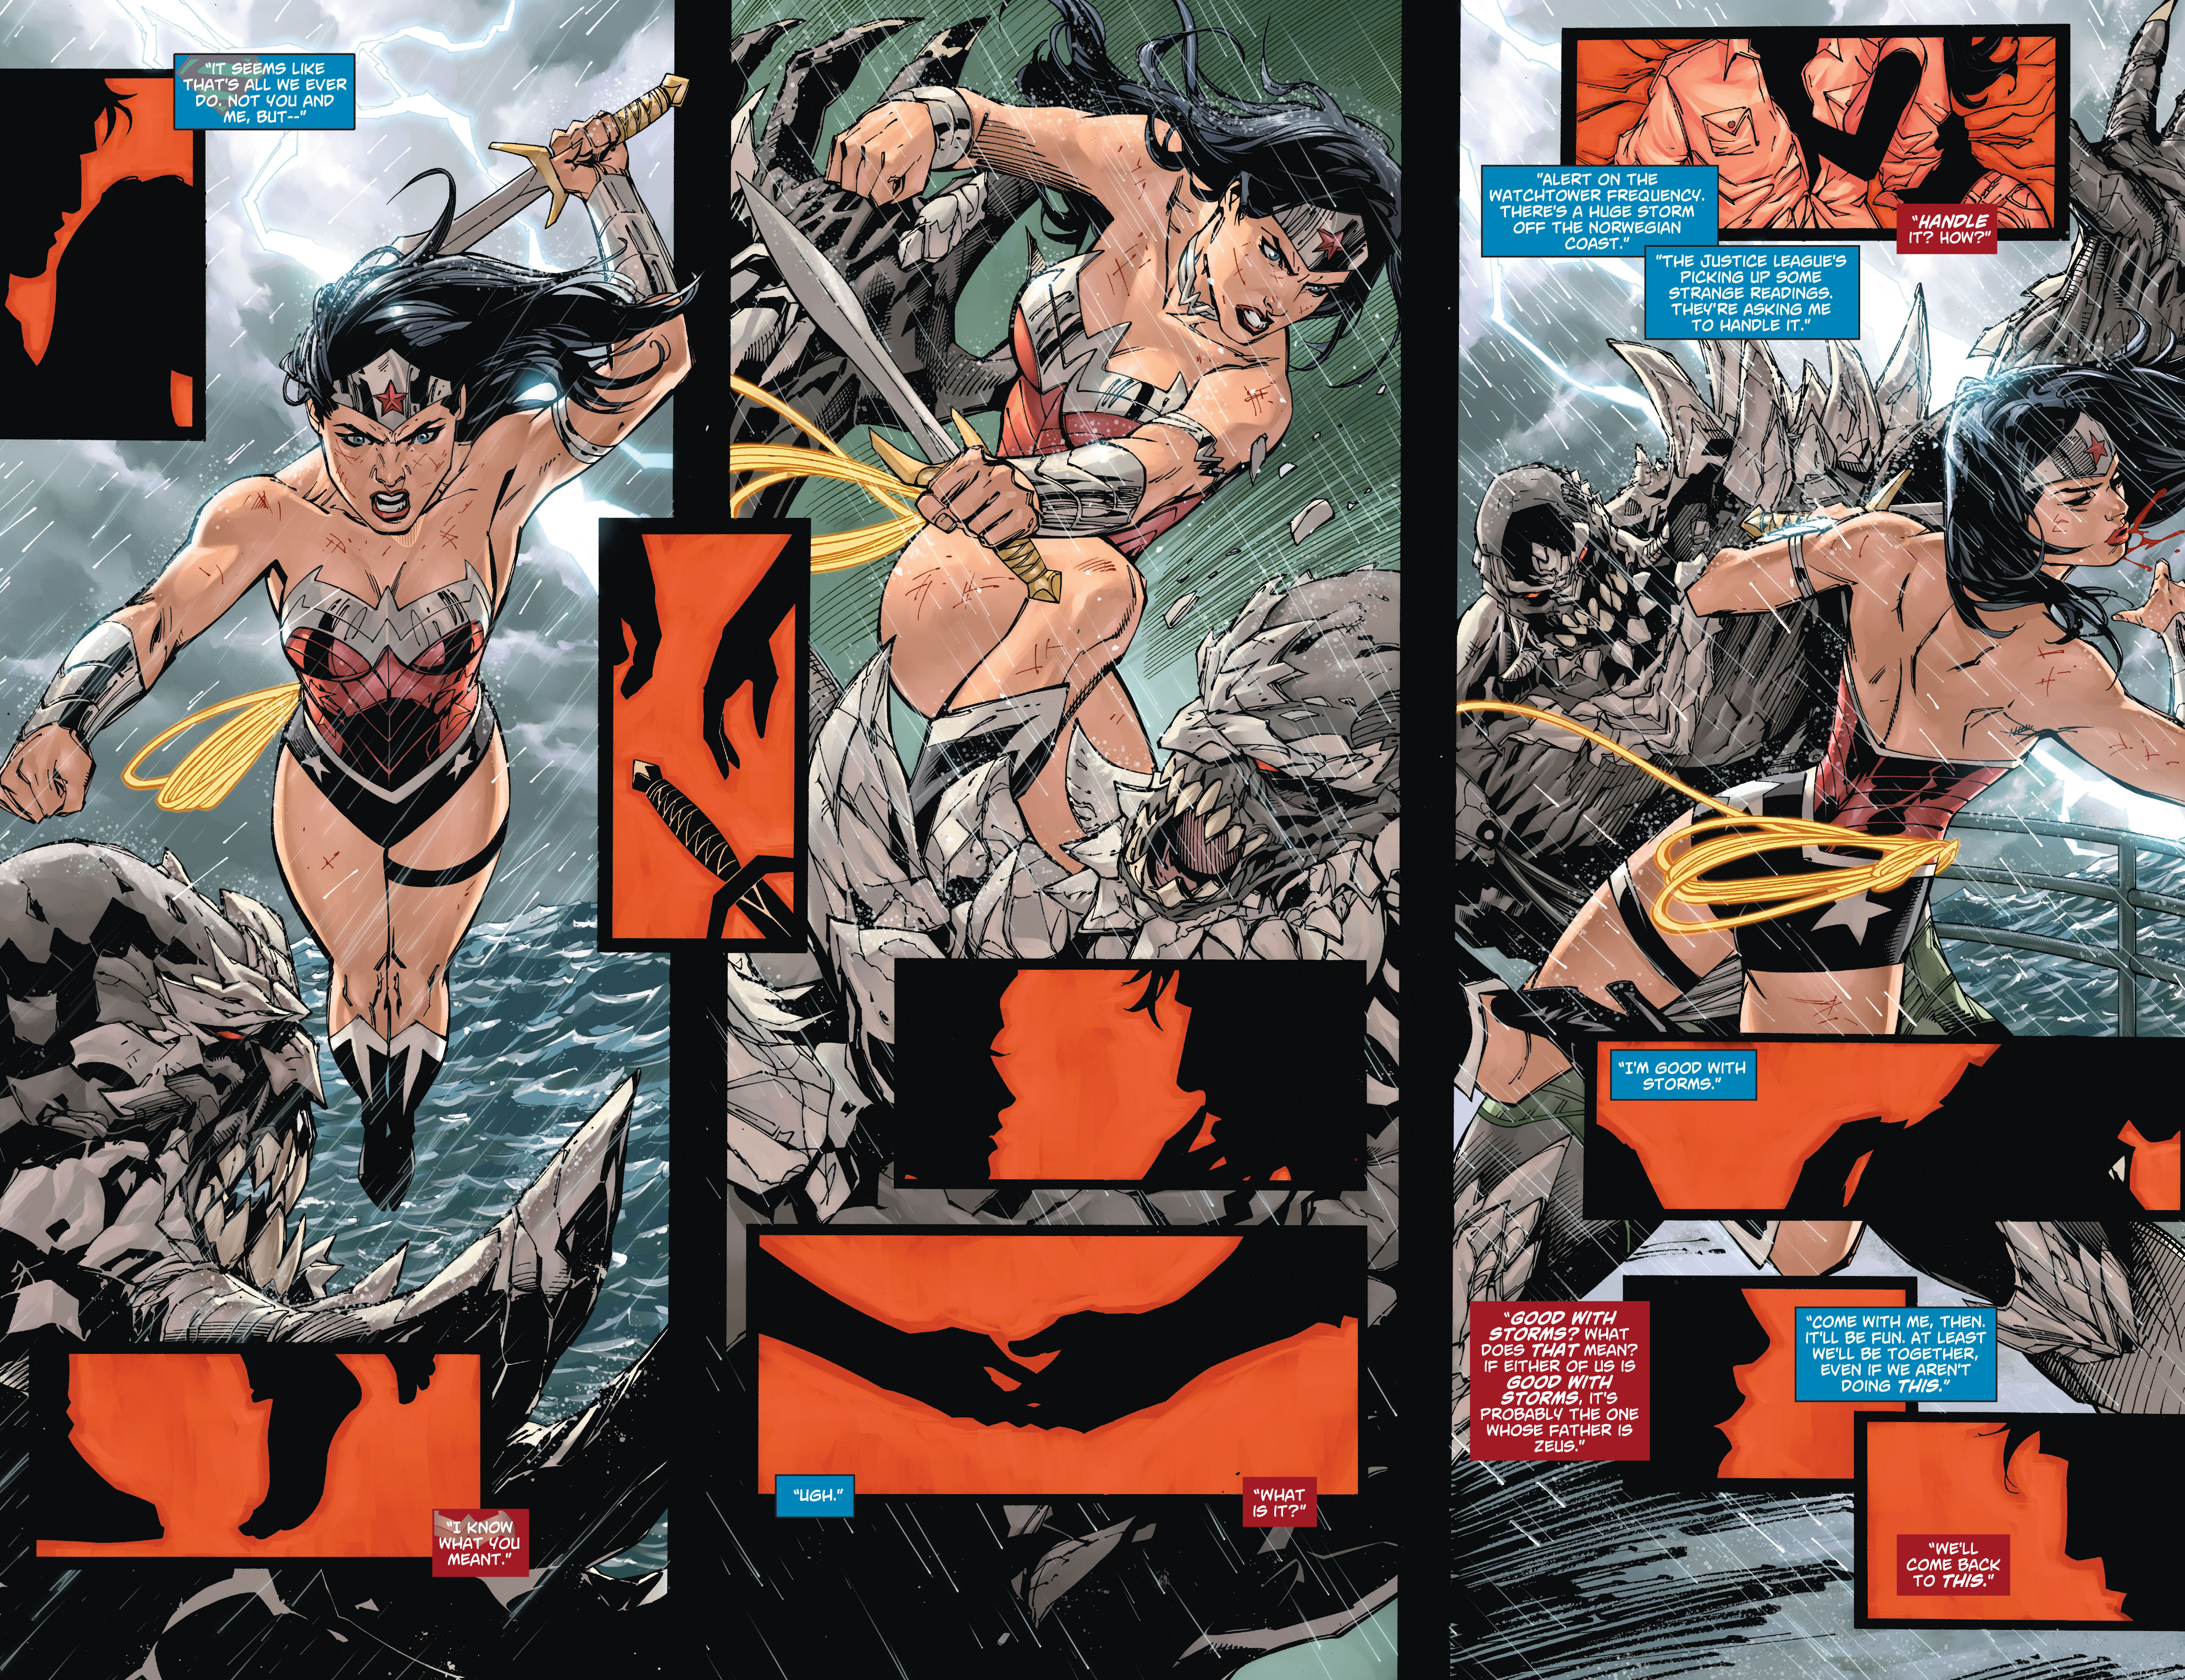 Read online Superman/Wonder Woman comic - Issue #1 - 20.